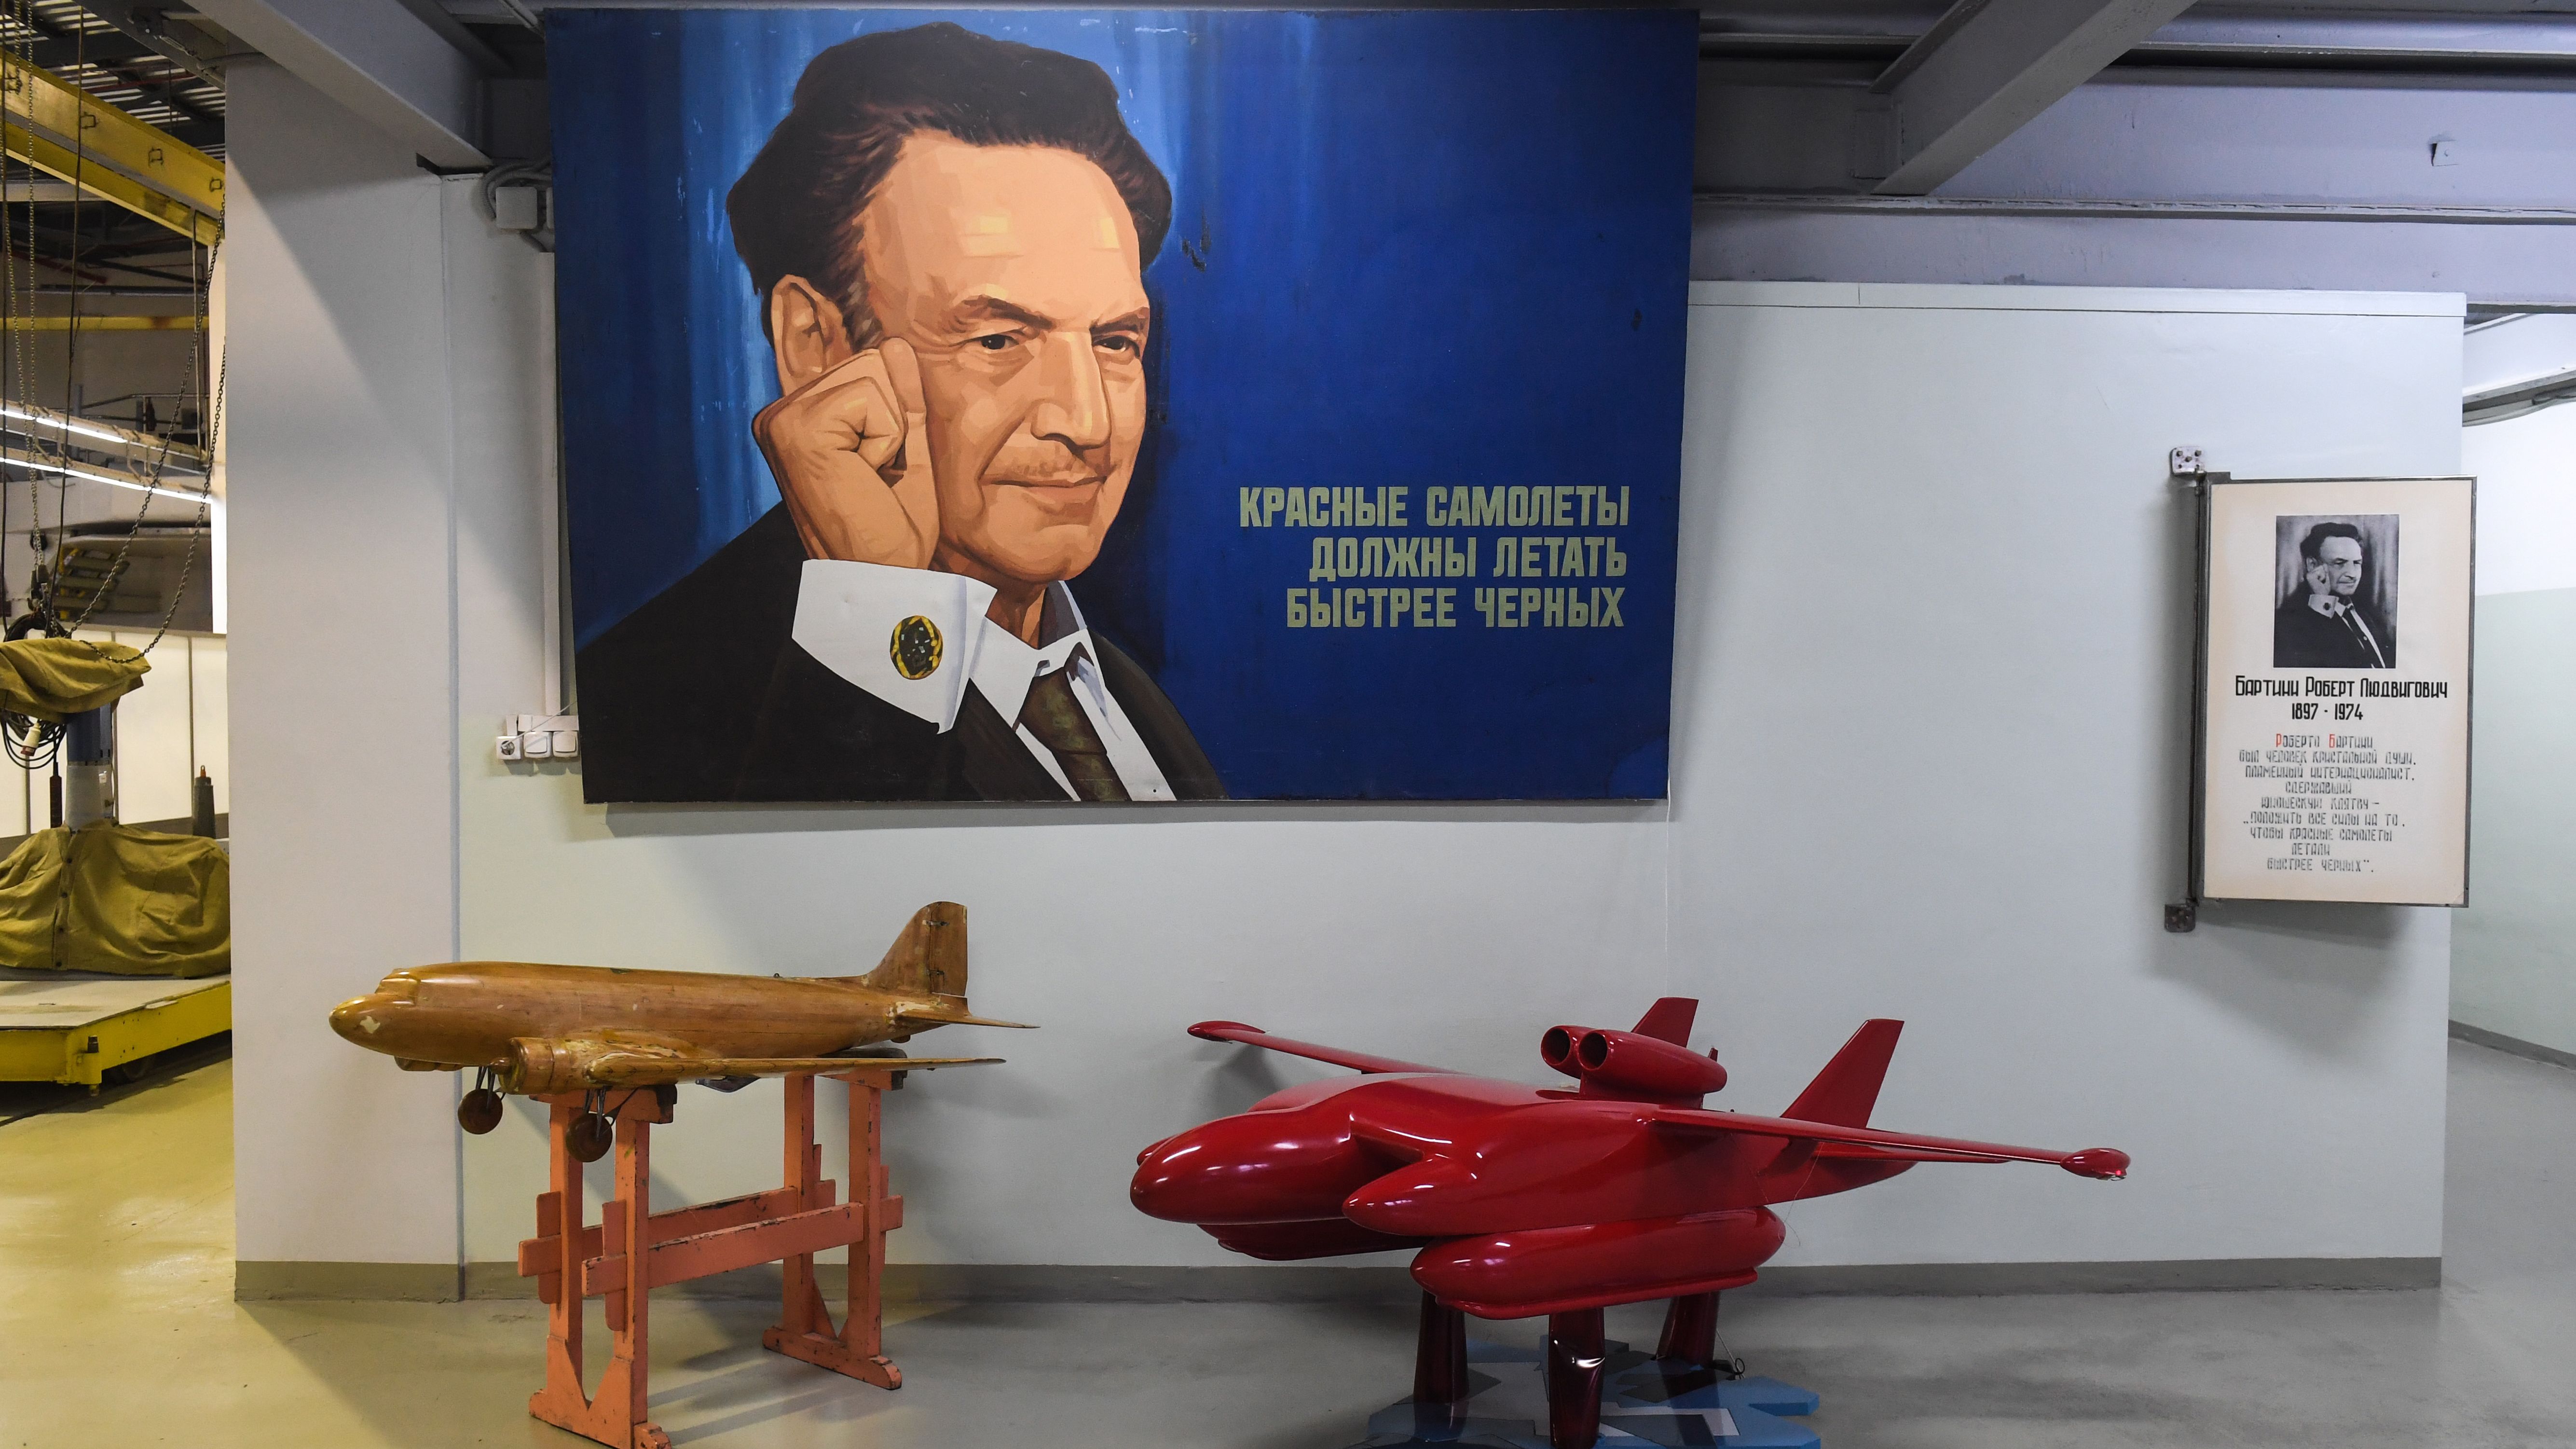 Robert Bartini: The world's most mysterious aircraft designer